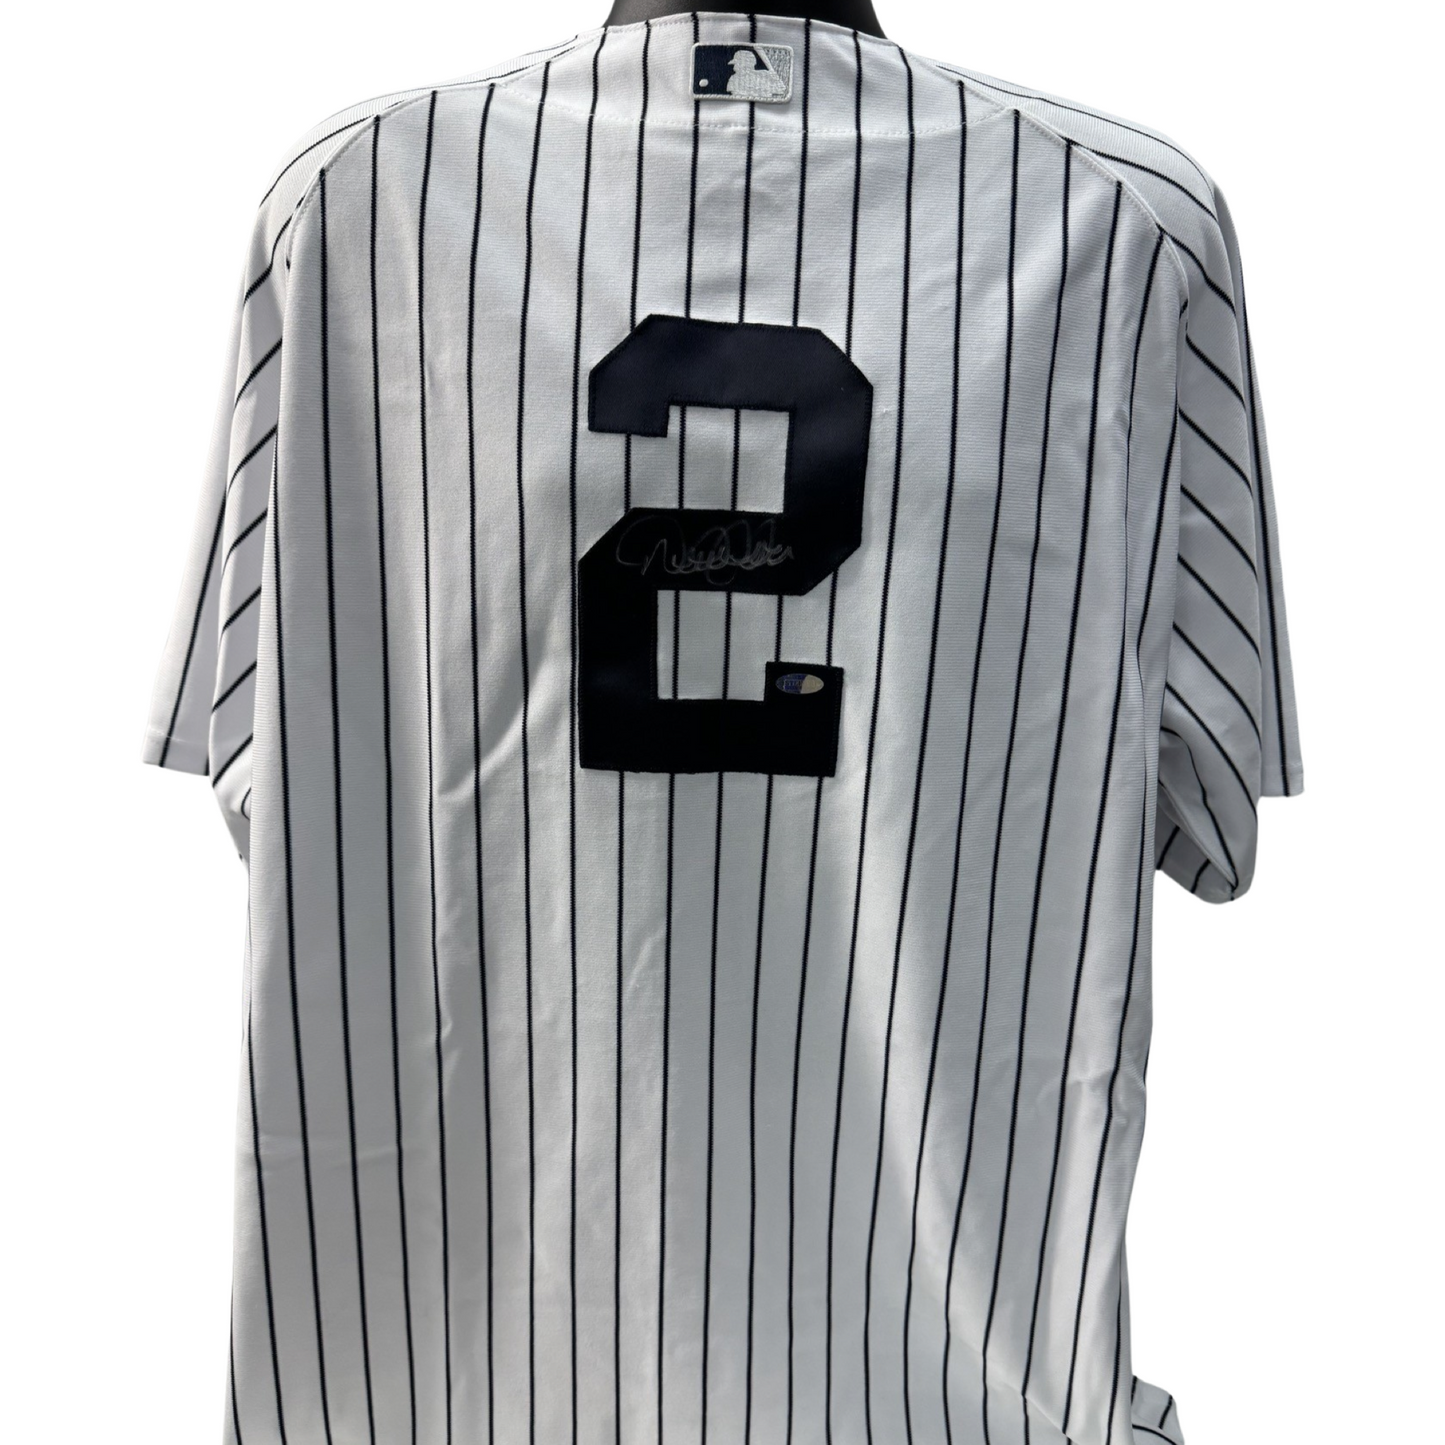 Derek Jeter Autographed New York Yankees Majestic Authentic Pinstripe Jersey Steiner